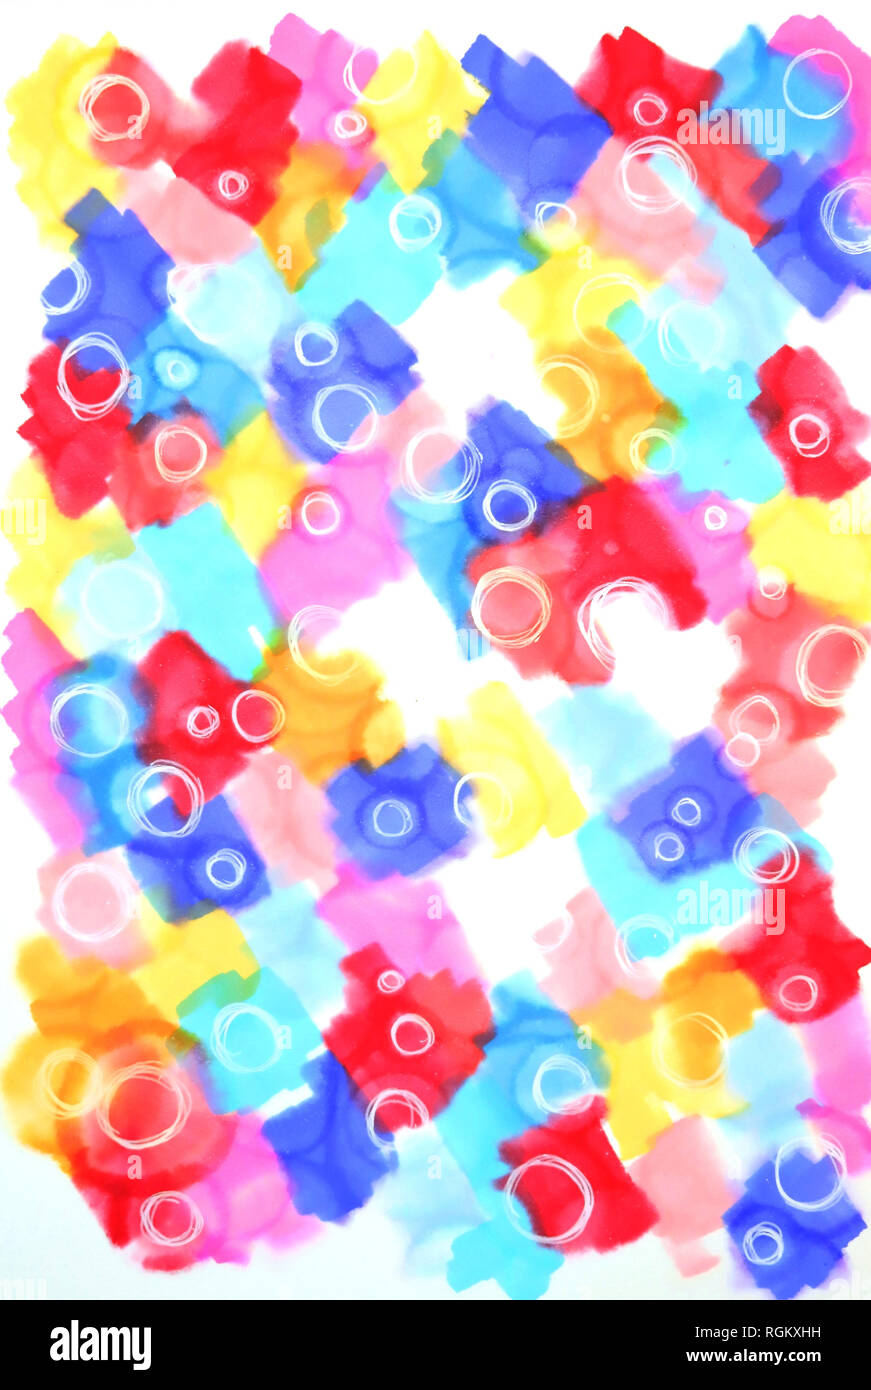 Colourful square shape illustration Stock Photo